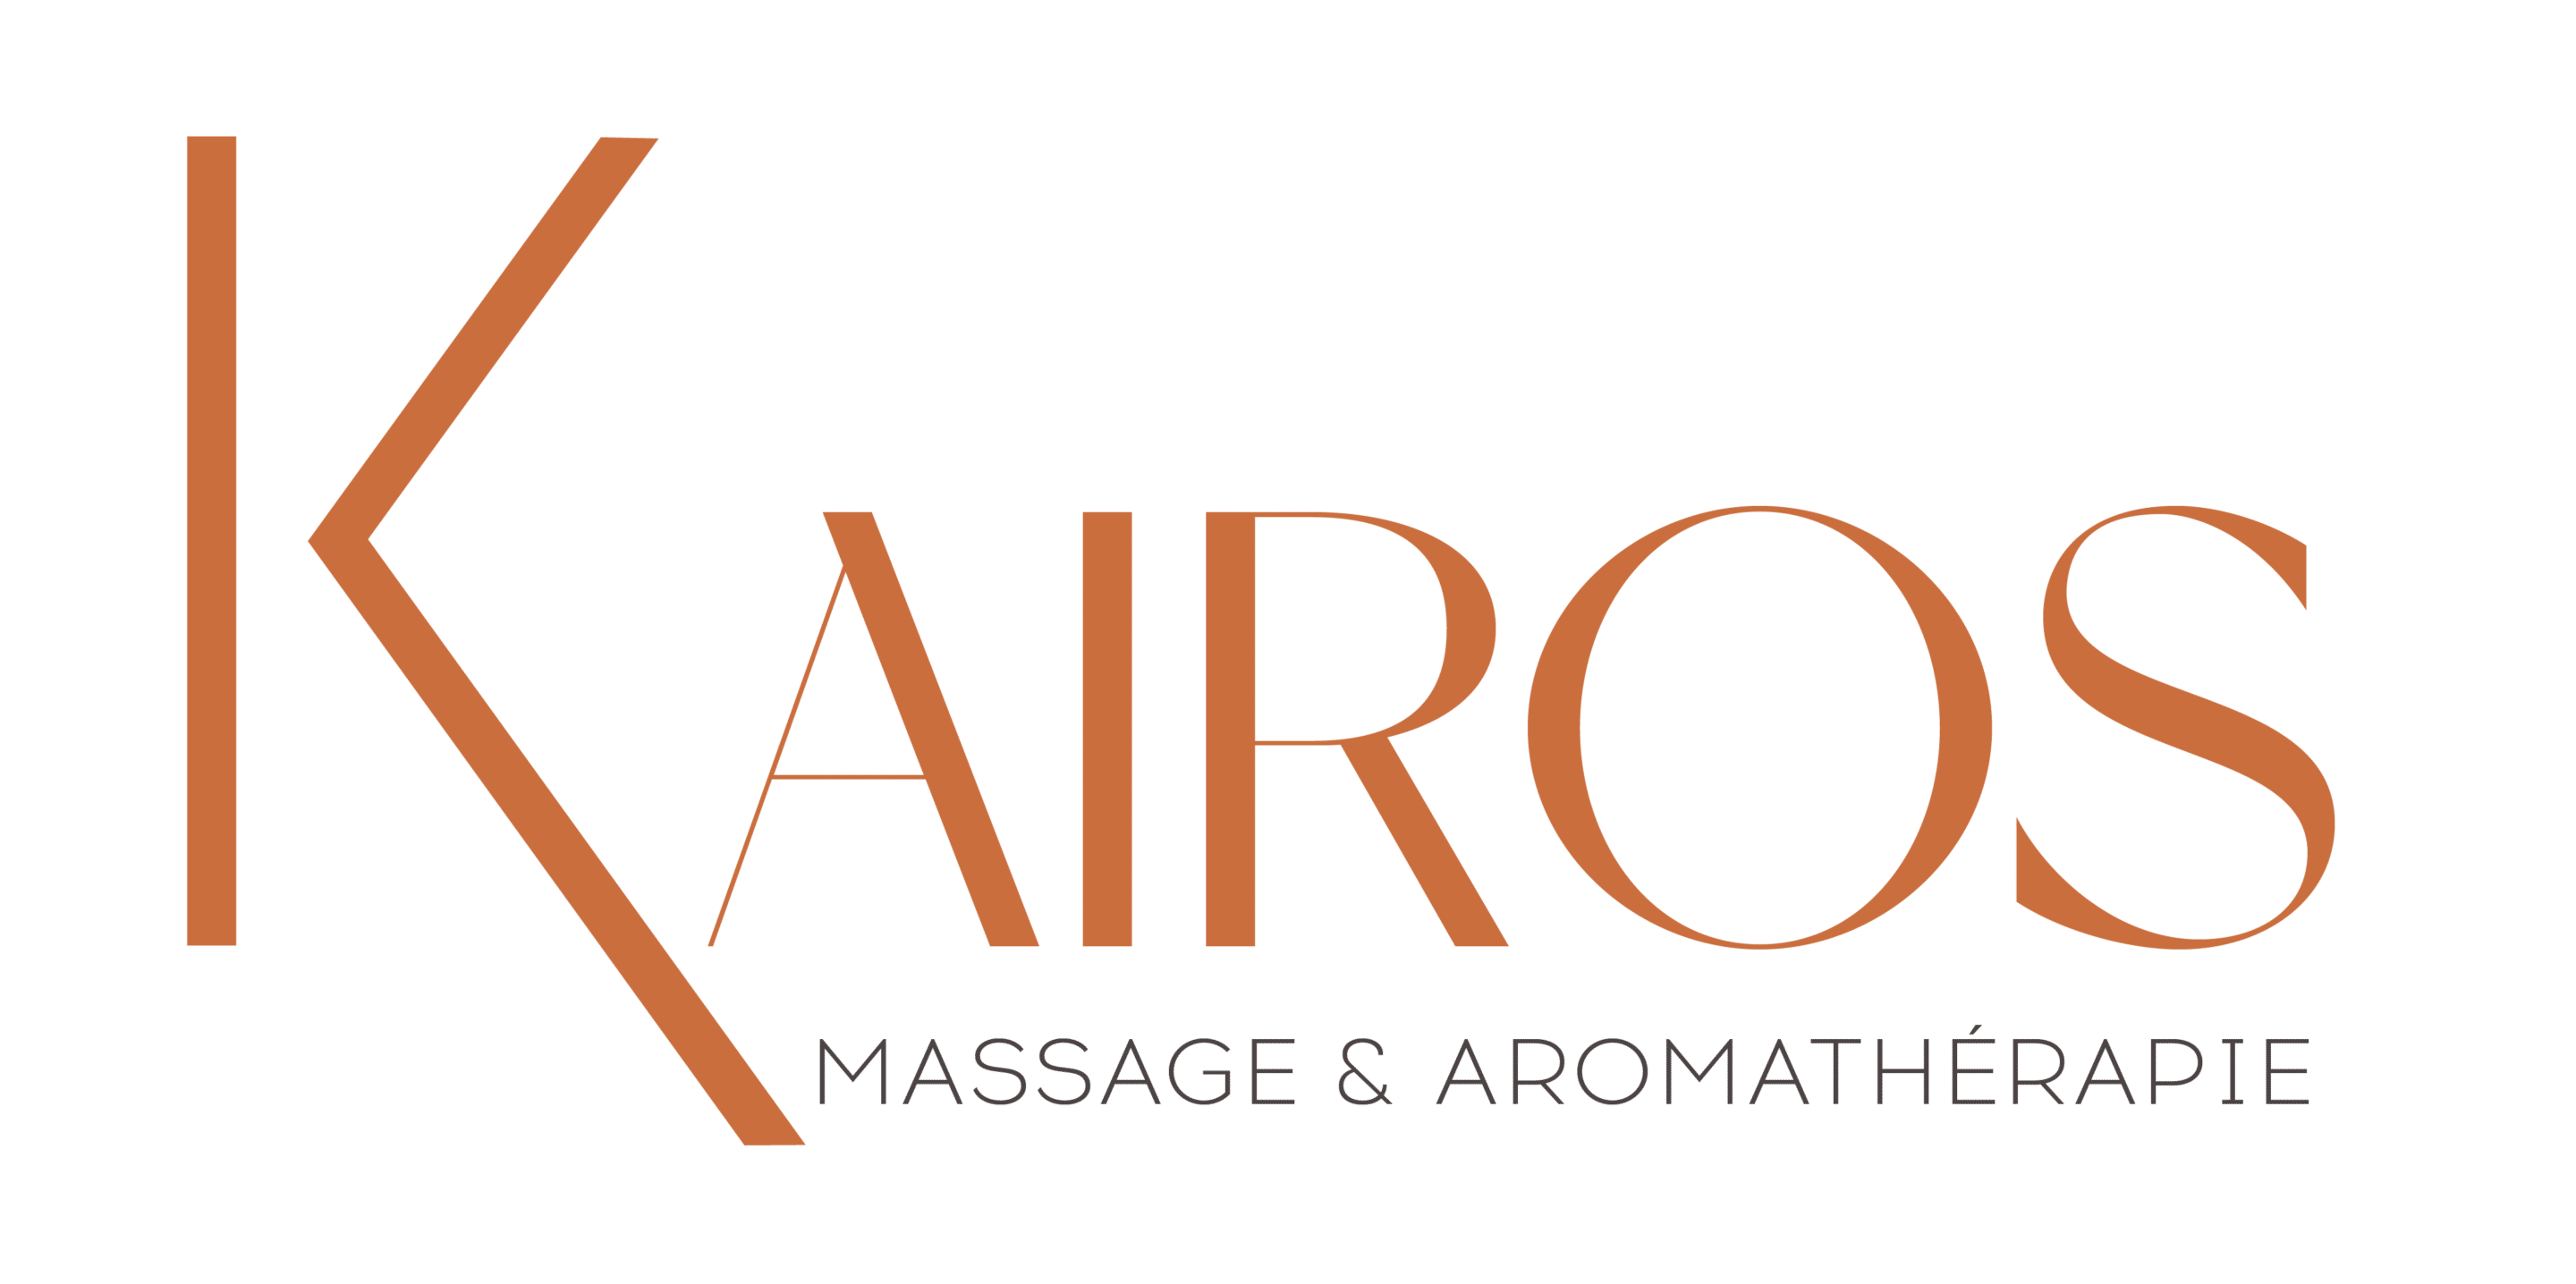 Kairos Massage